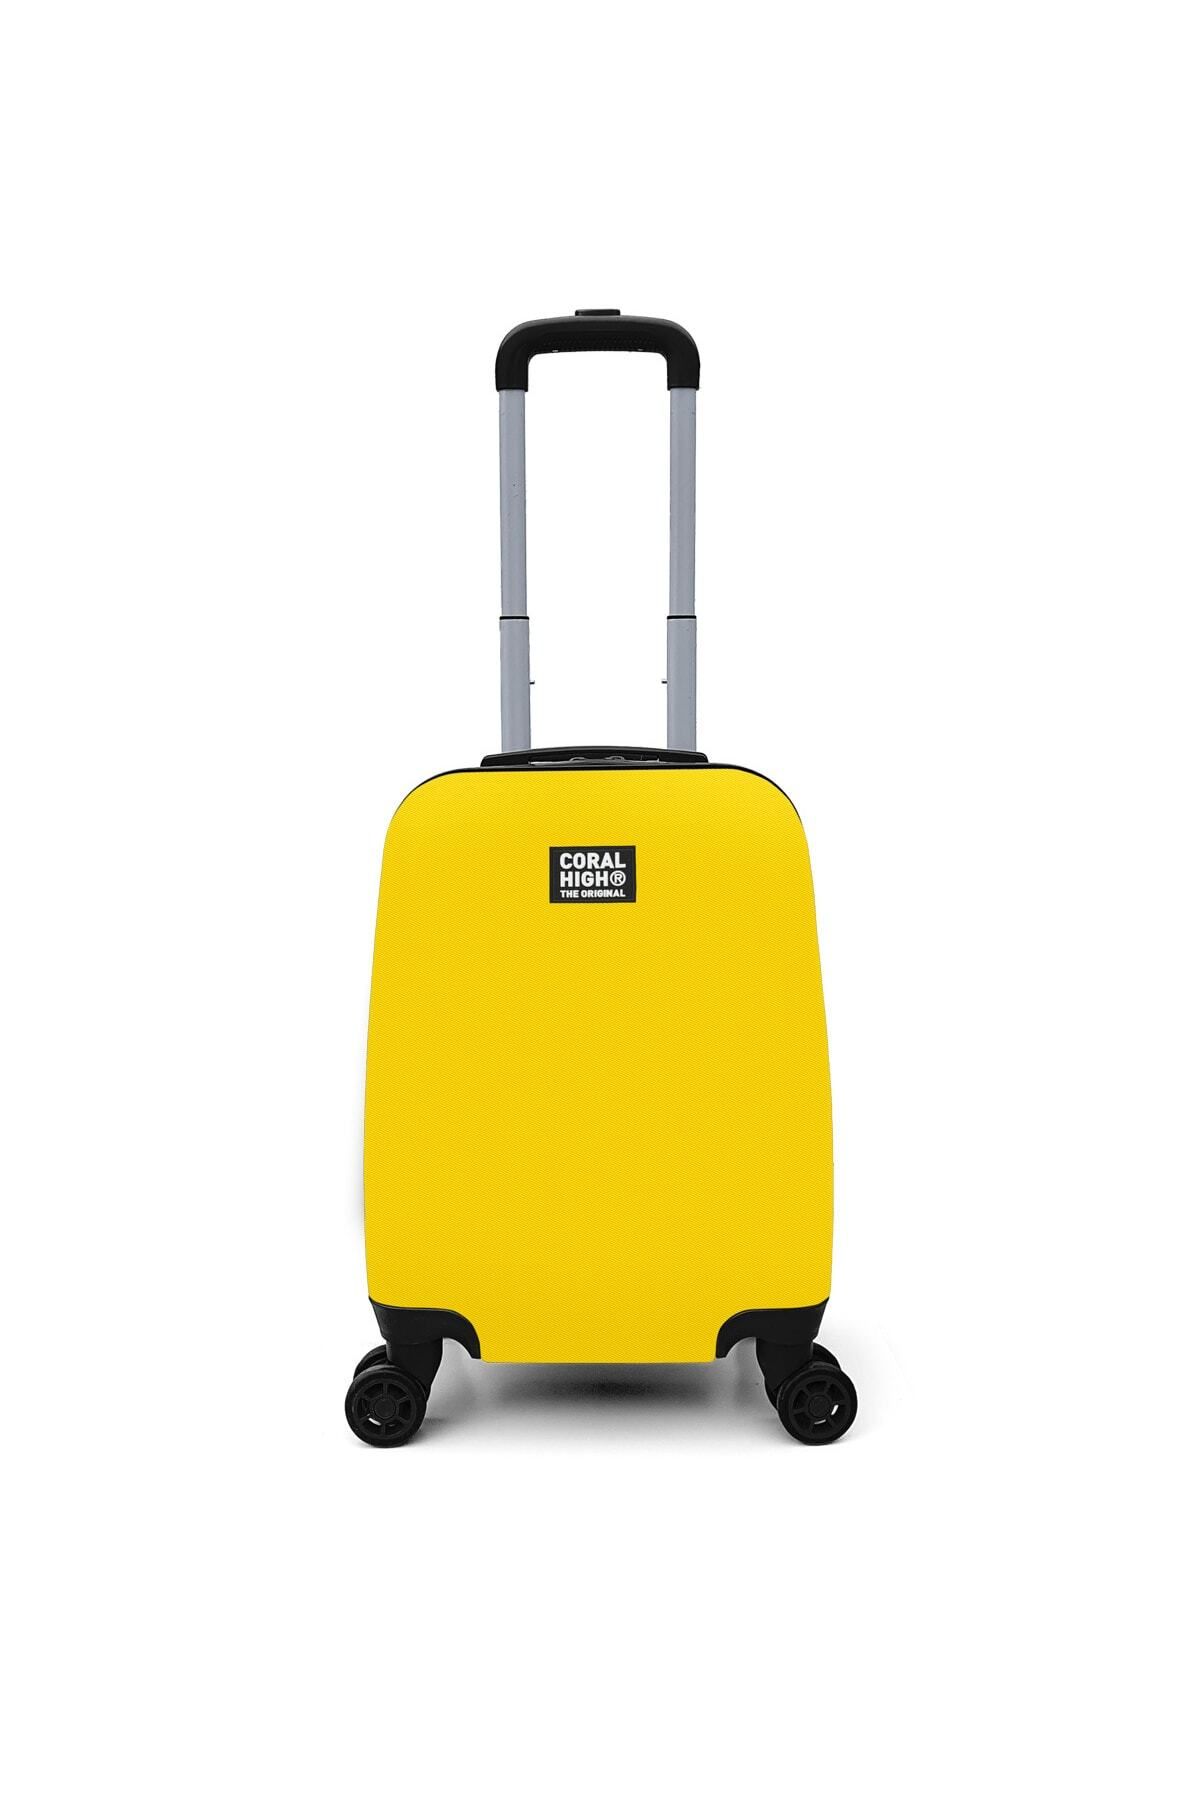 Coral High Sarı Mini Kabin Valizi 16513